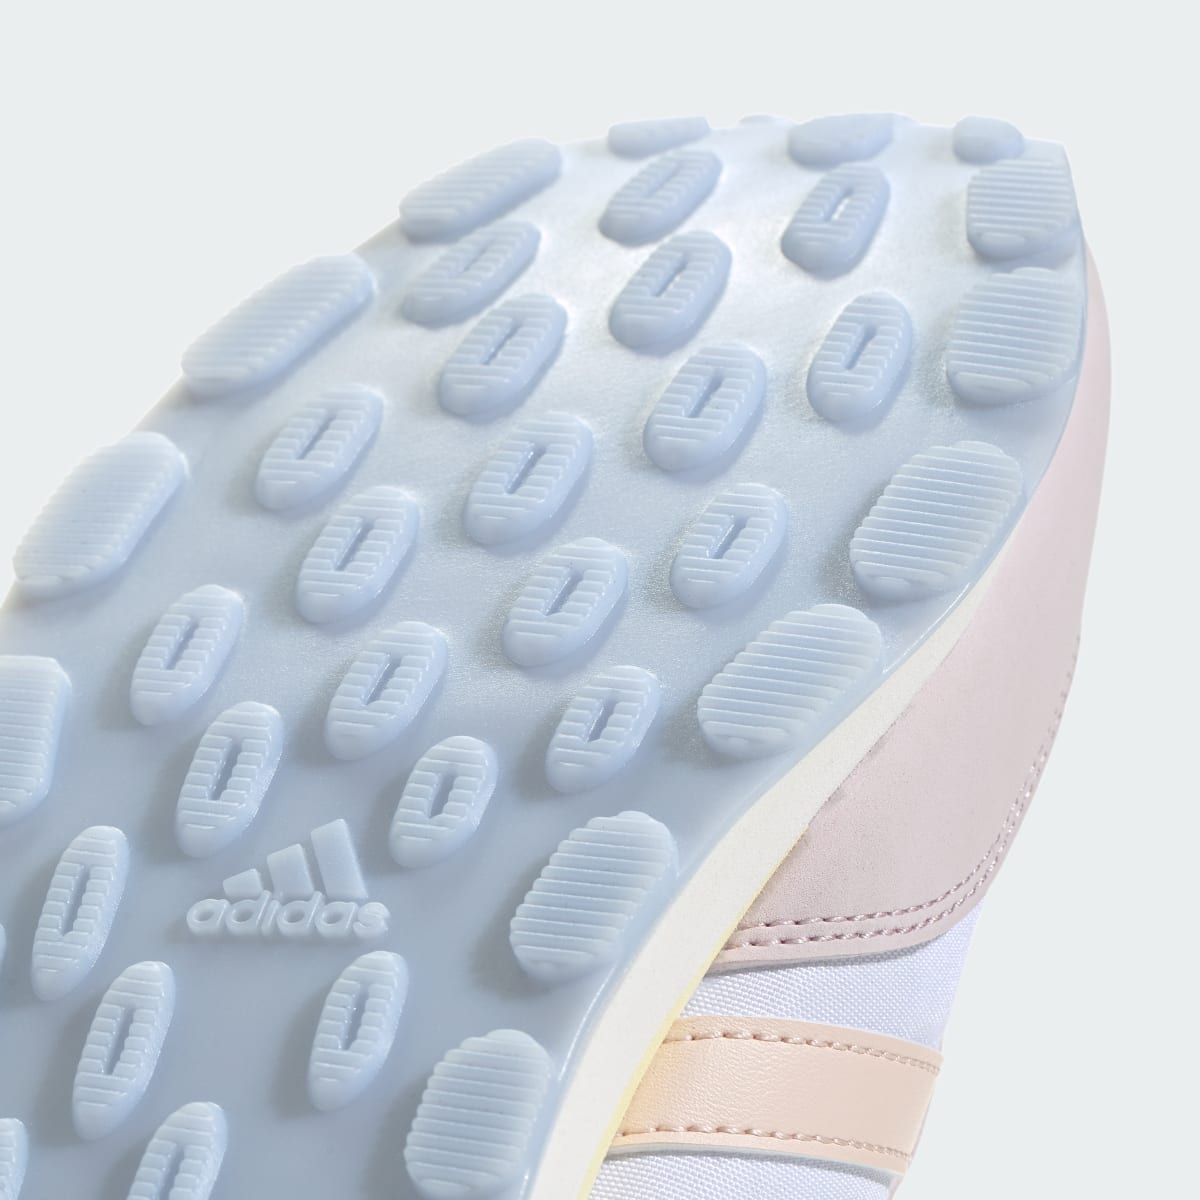 Adidas Run 60s 3.0 Lifestyle Running Shoes. 10